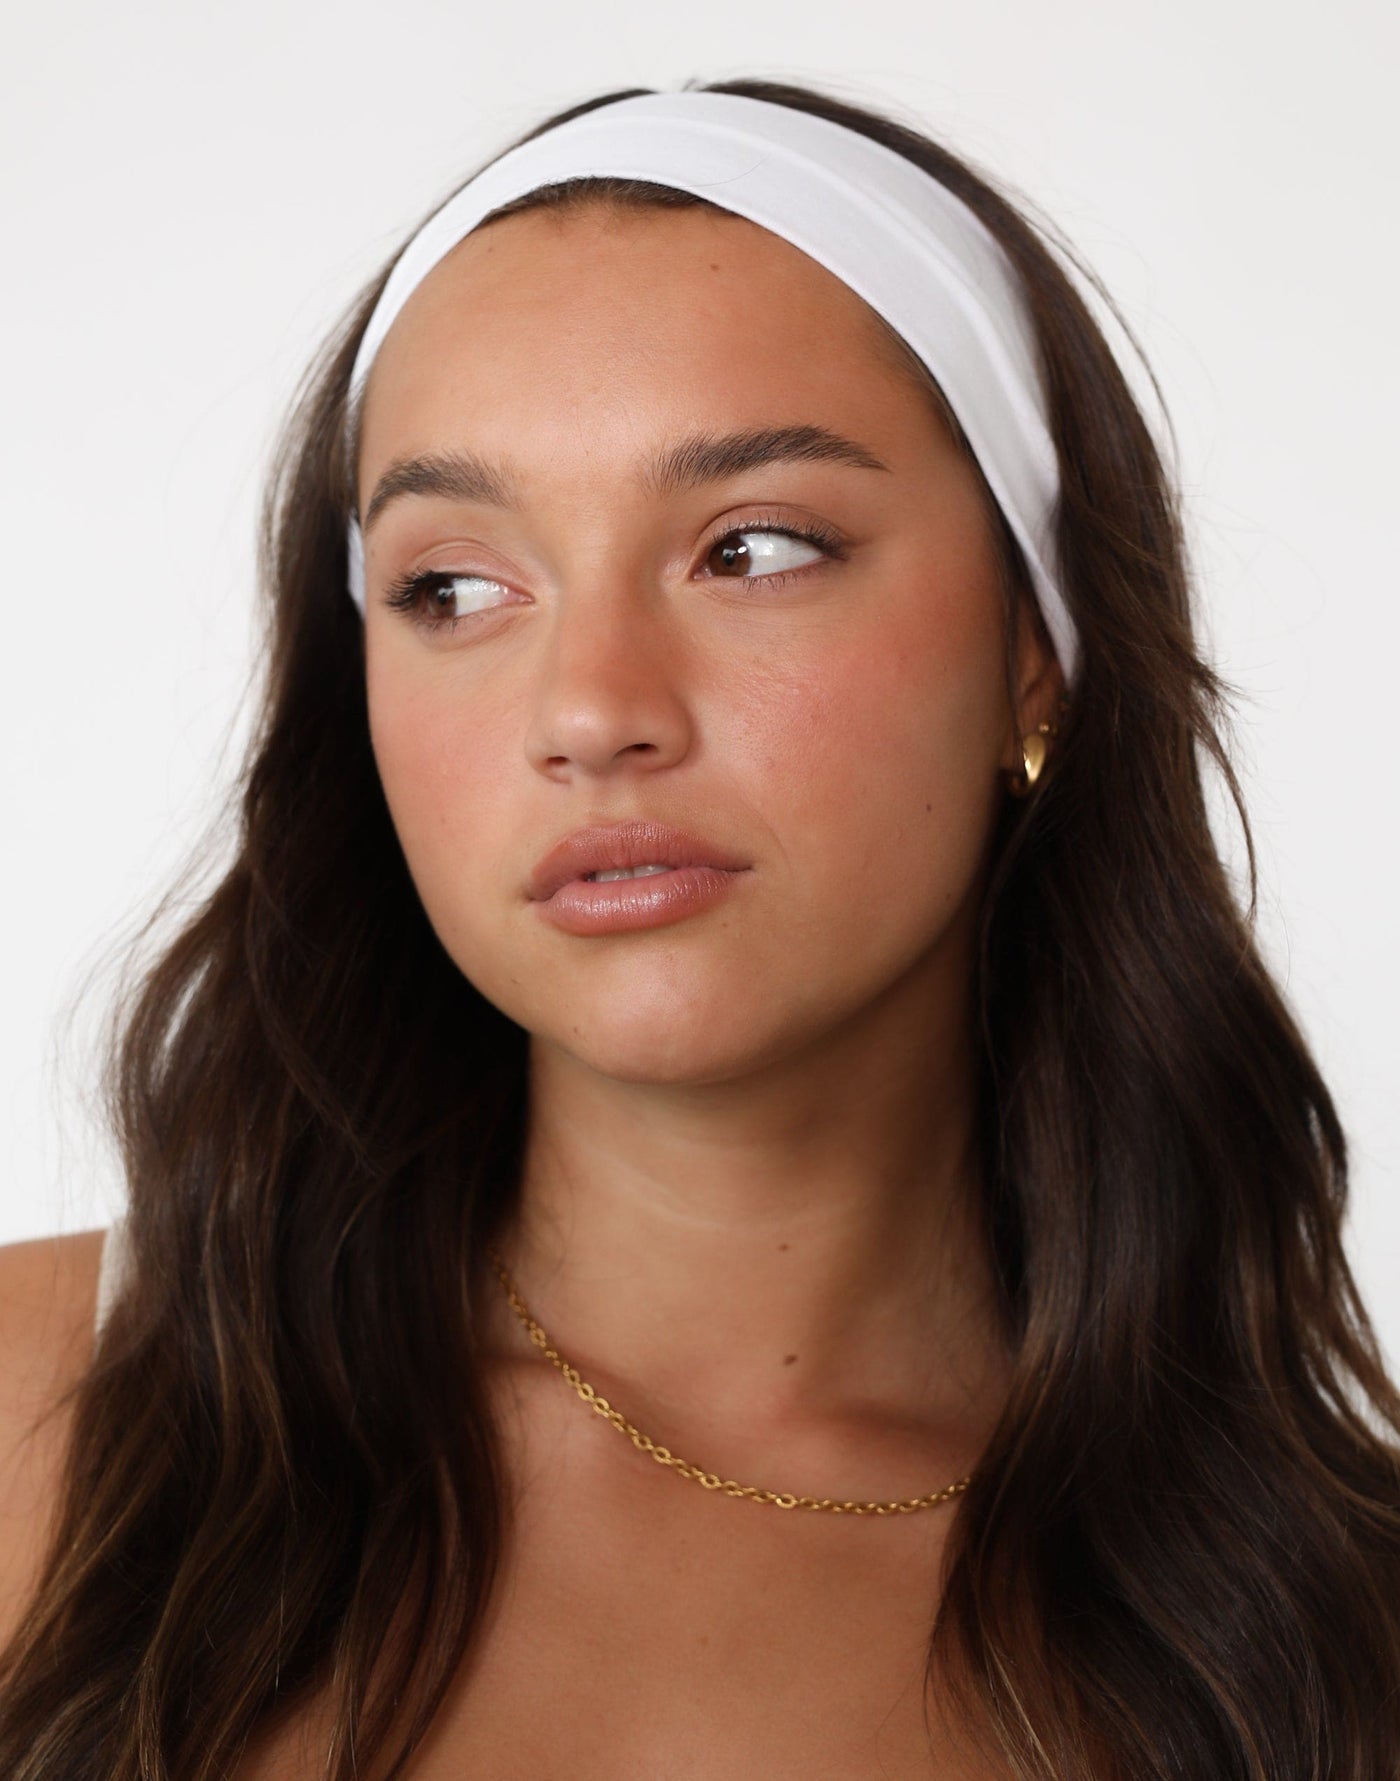 Carmen Headband (White) | Basic White Headband Accessory - Women's Accessories - Charcoal Clothing